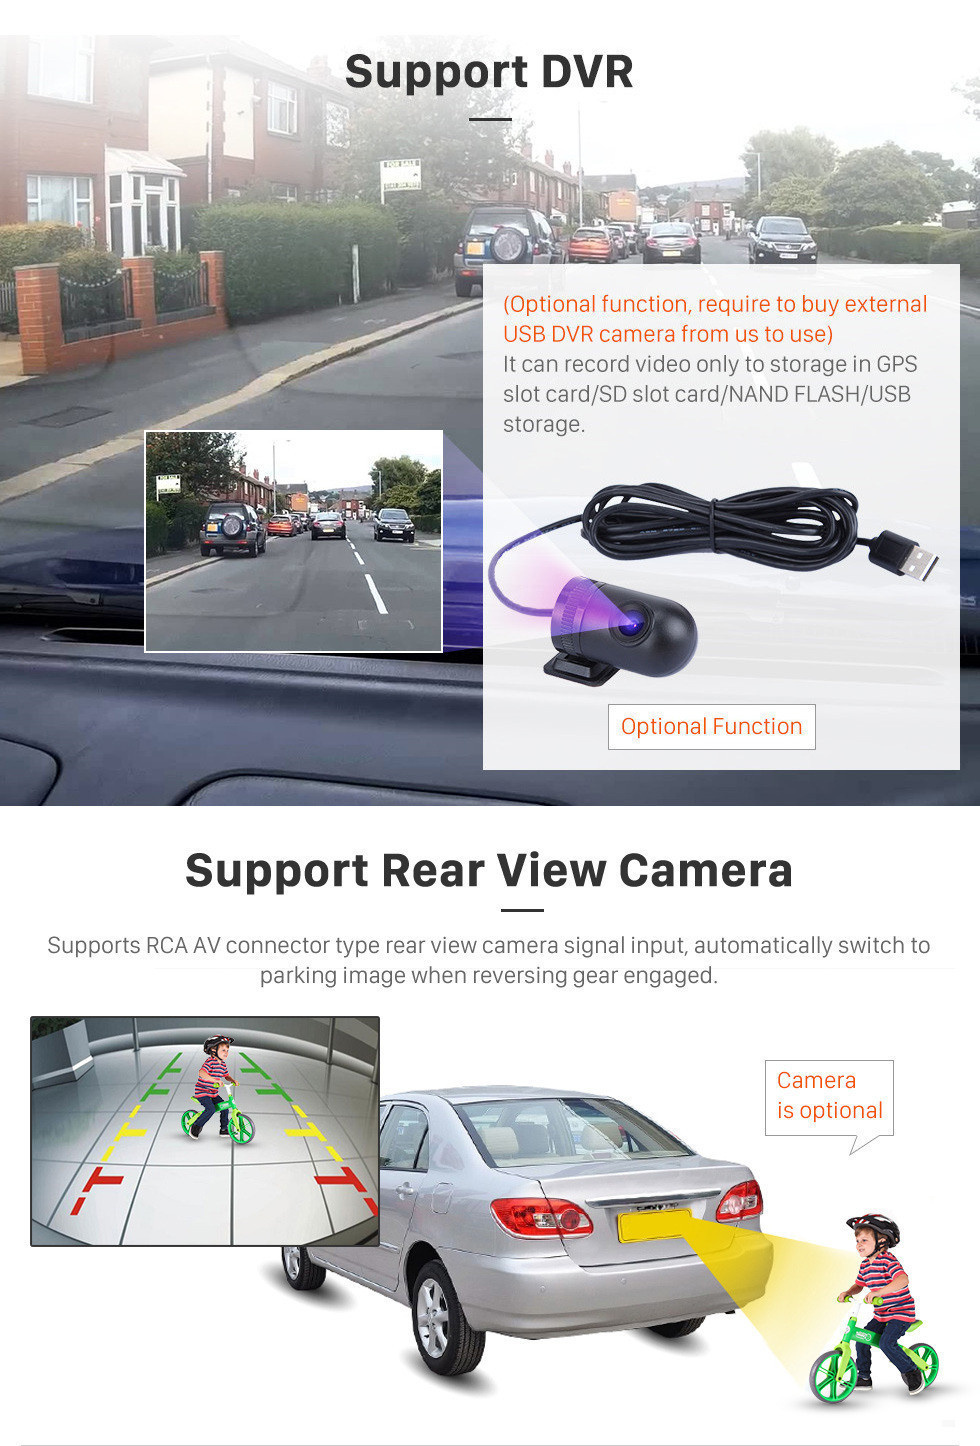 Seicane 10.1 pulgadas Sistema de navegación GPS Android 11.0 2019 Toyota Corolla Soporte Radio IPS Pantalla completa 3G WiFi Bluetooth OBD2 Control del volante